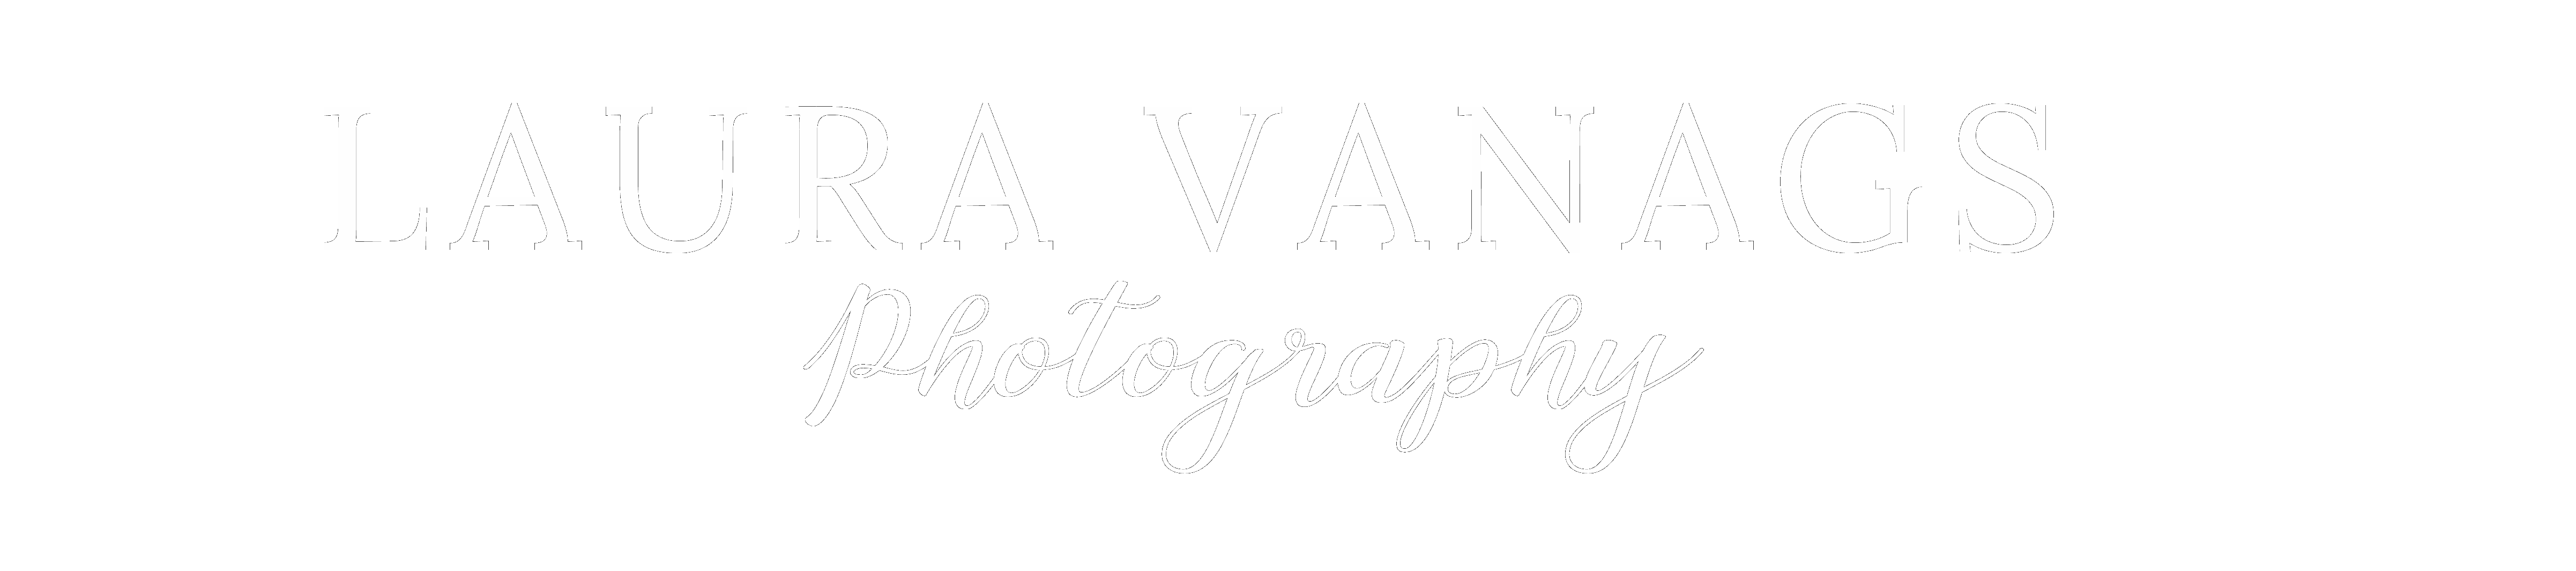 Laura Vanags Photography logo